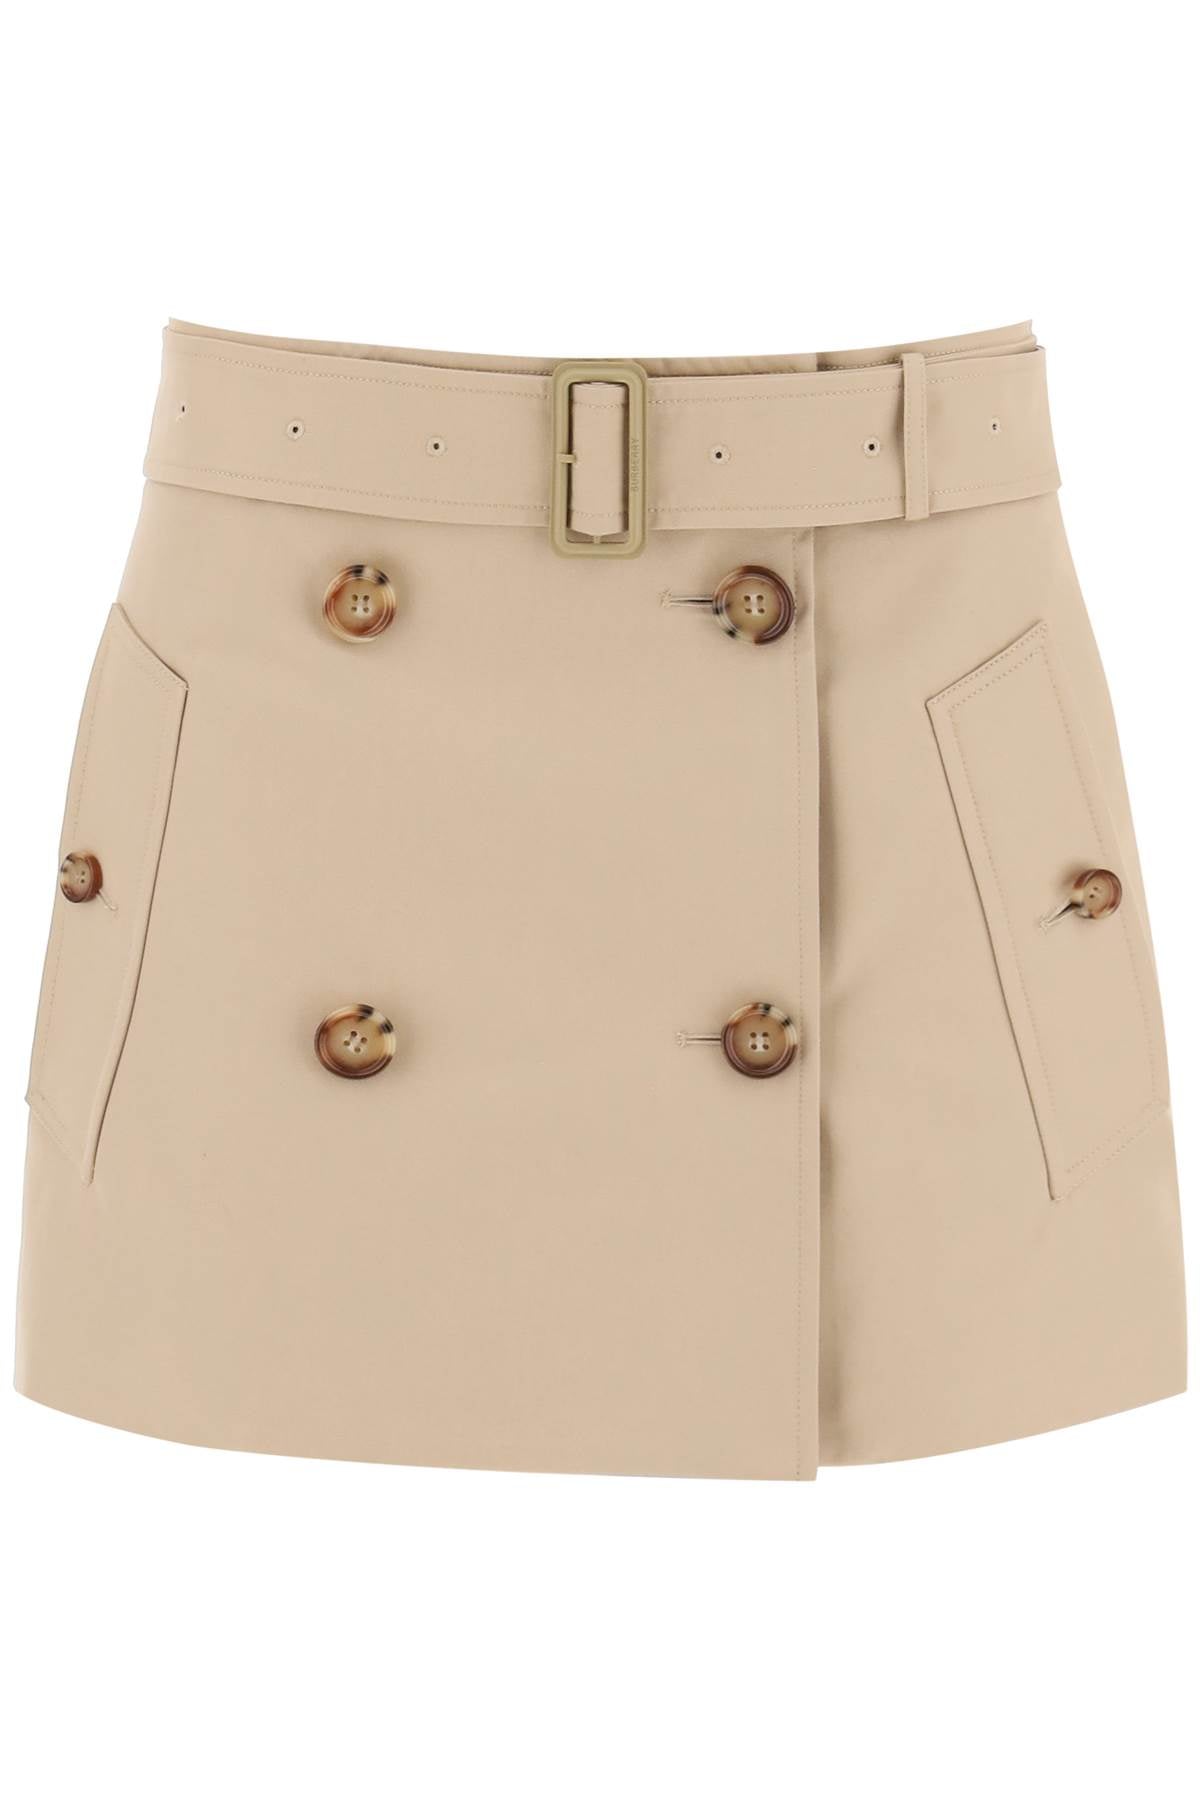 BURBERRY Chic Gabardine Trench Cotton Miniskirt in Camel Brown